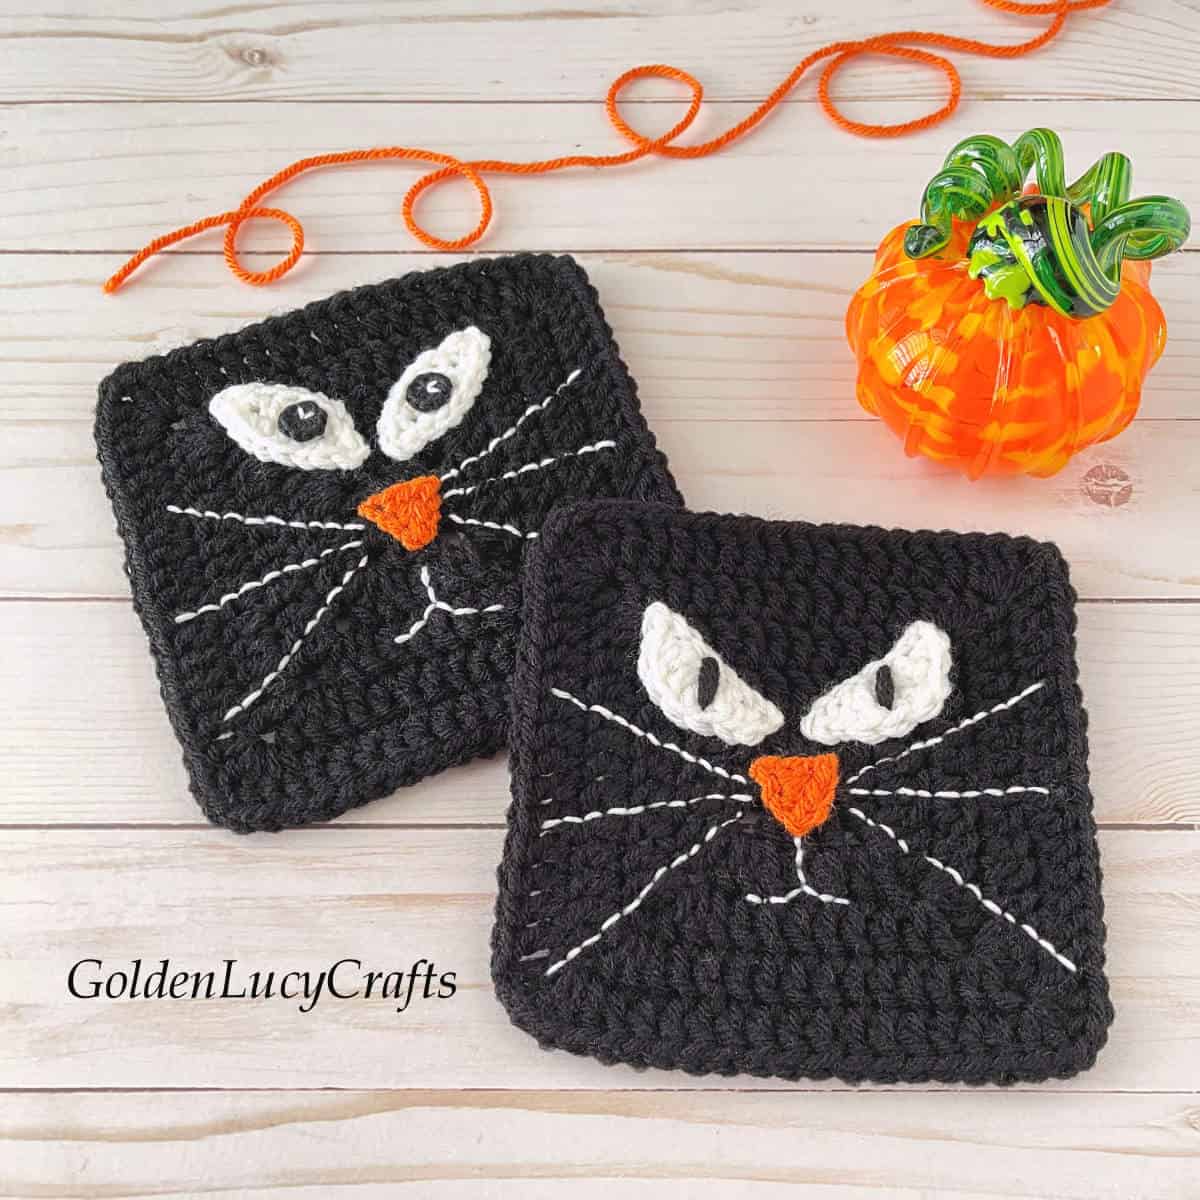 Two crochet black cat granny squares.